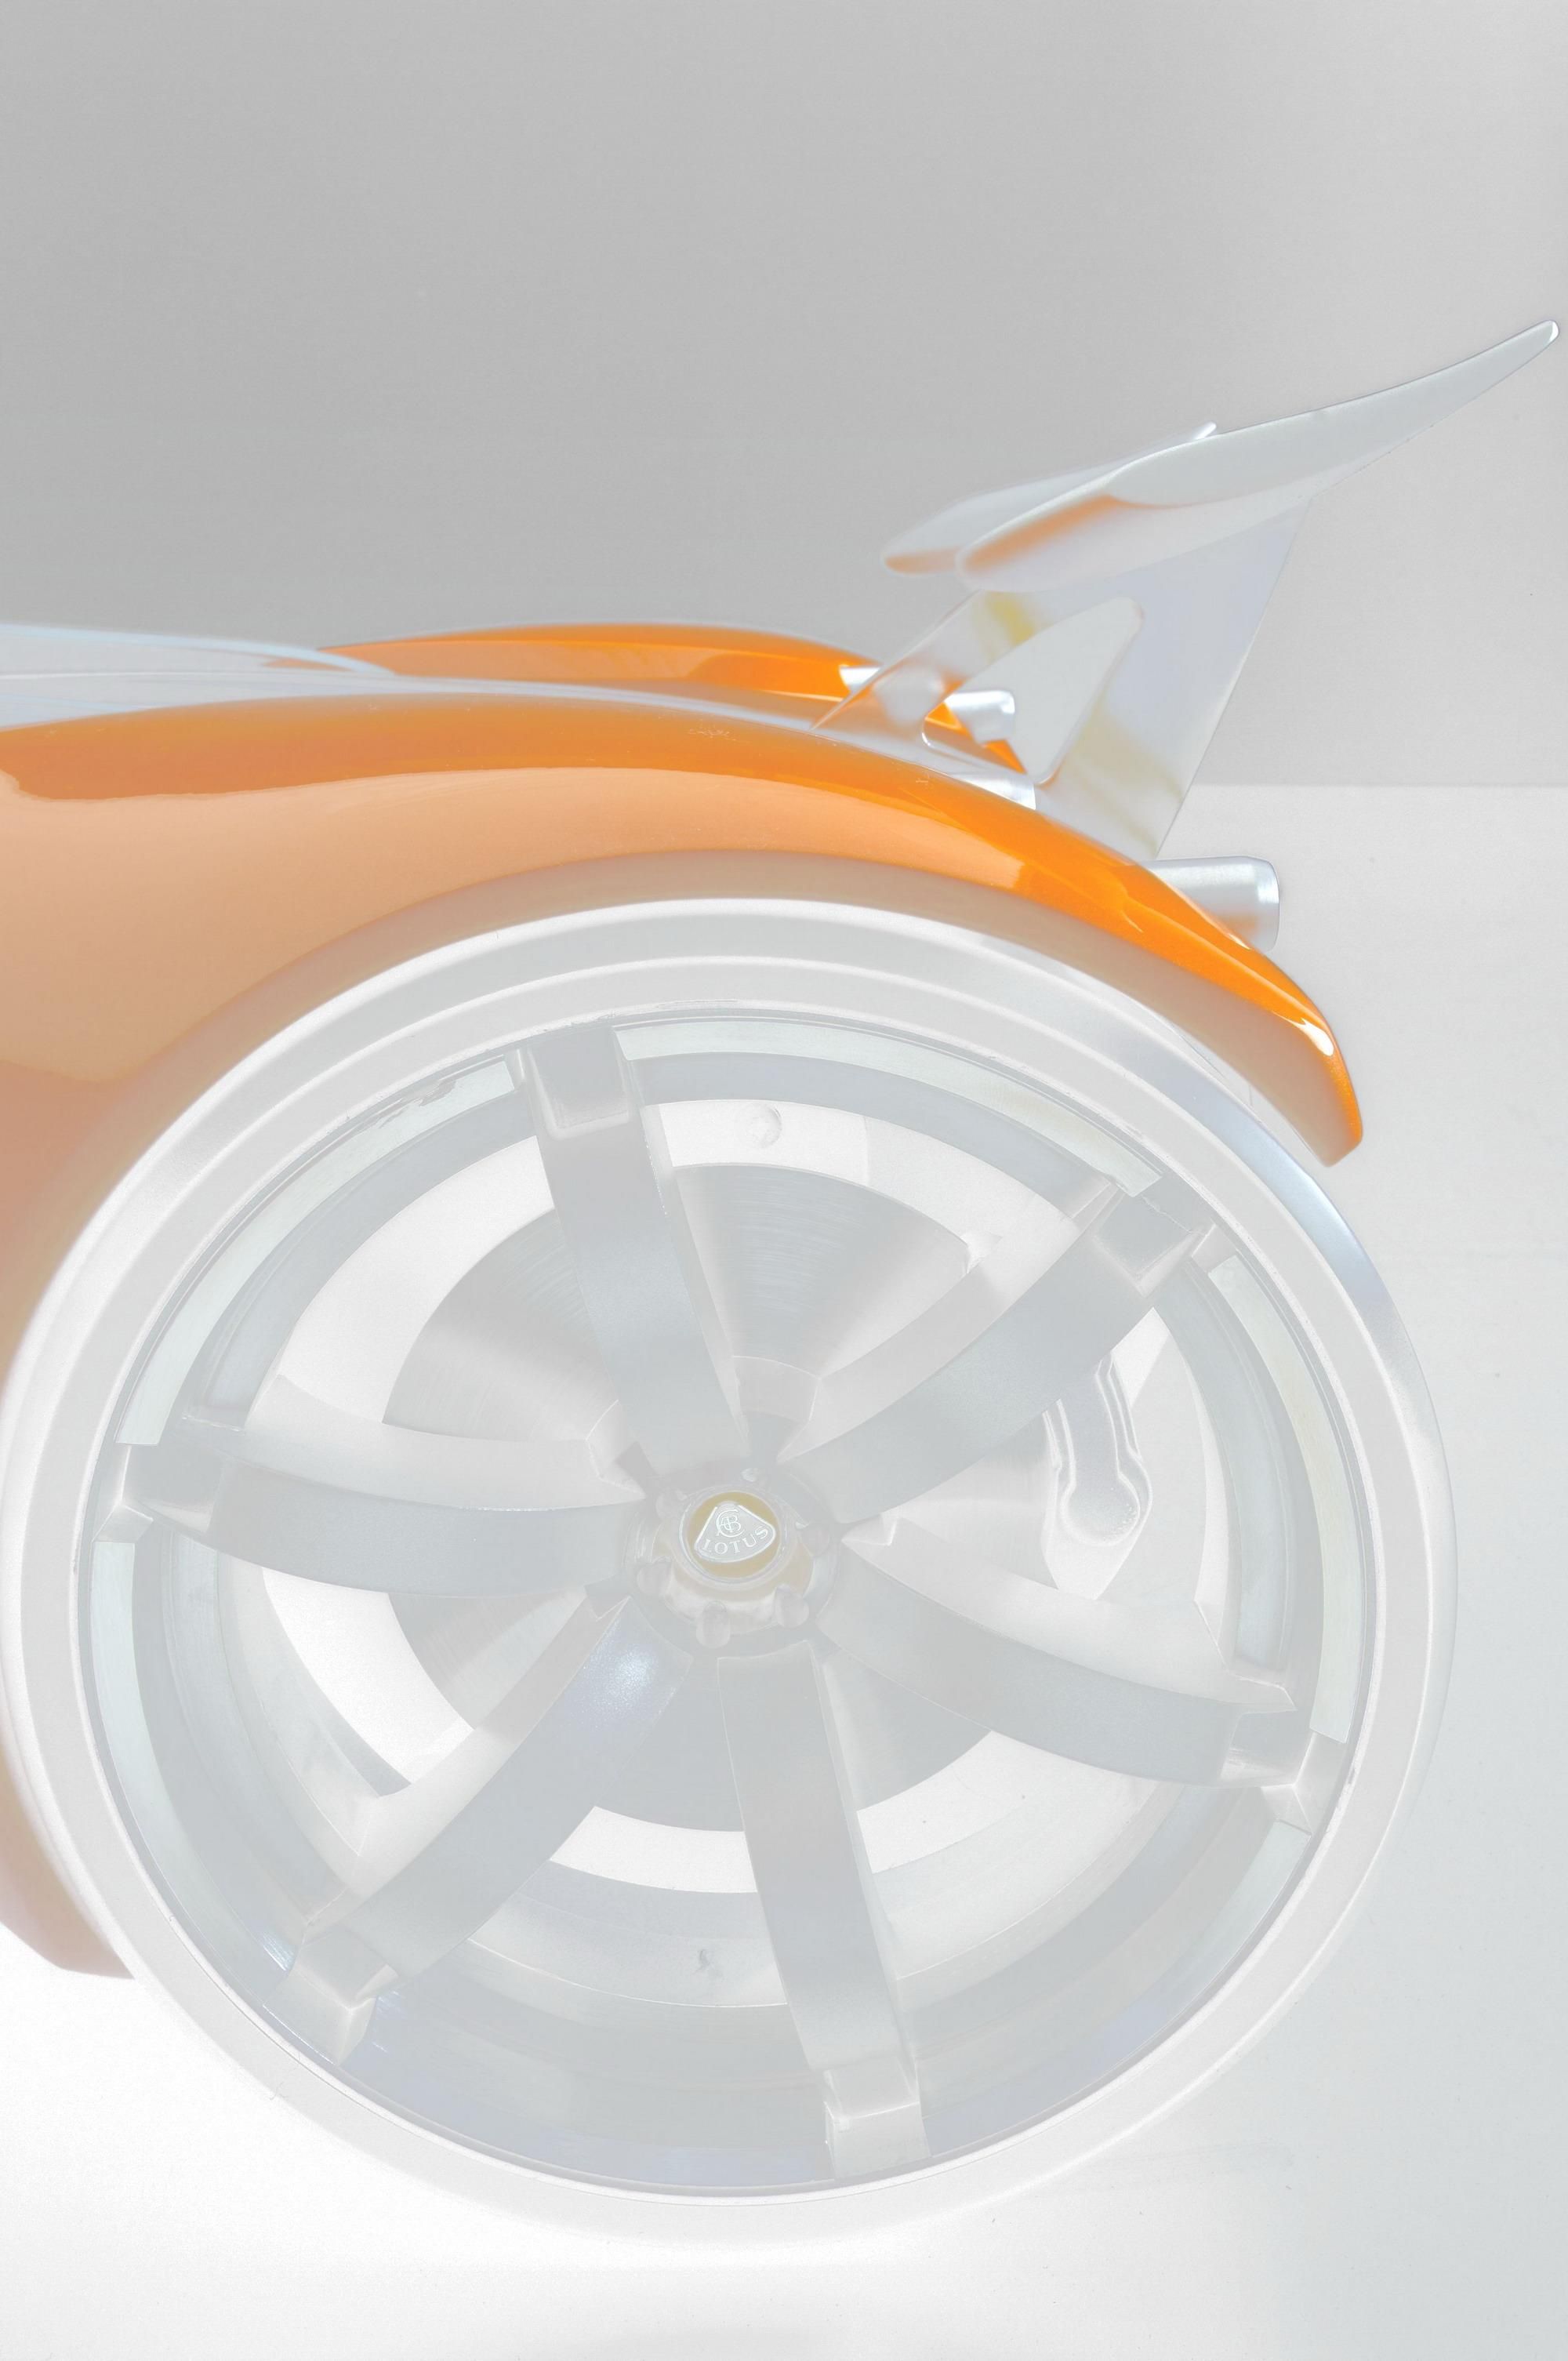 2007 Lotus Hot Wheels Concept